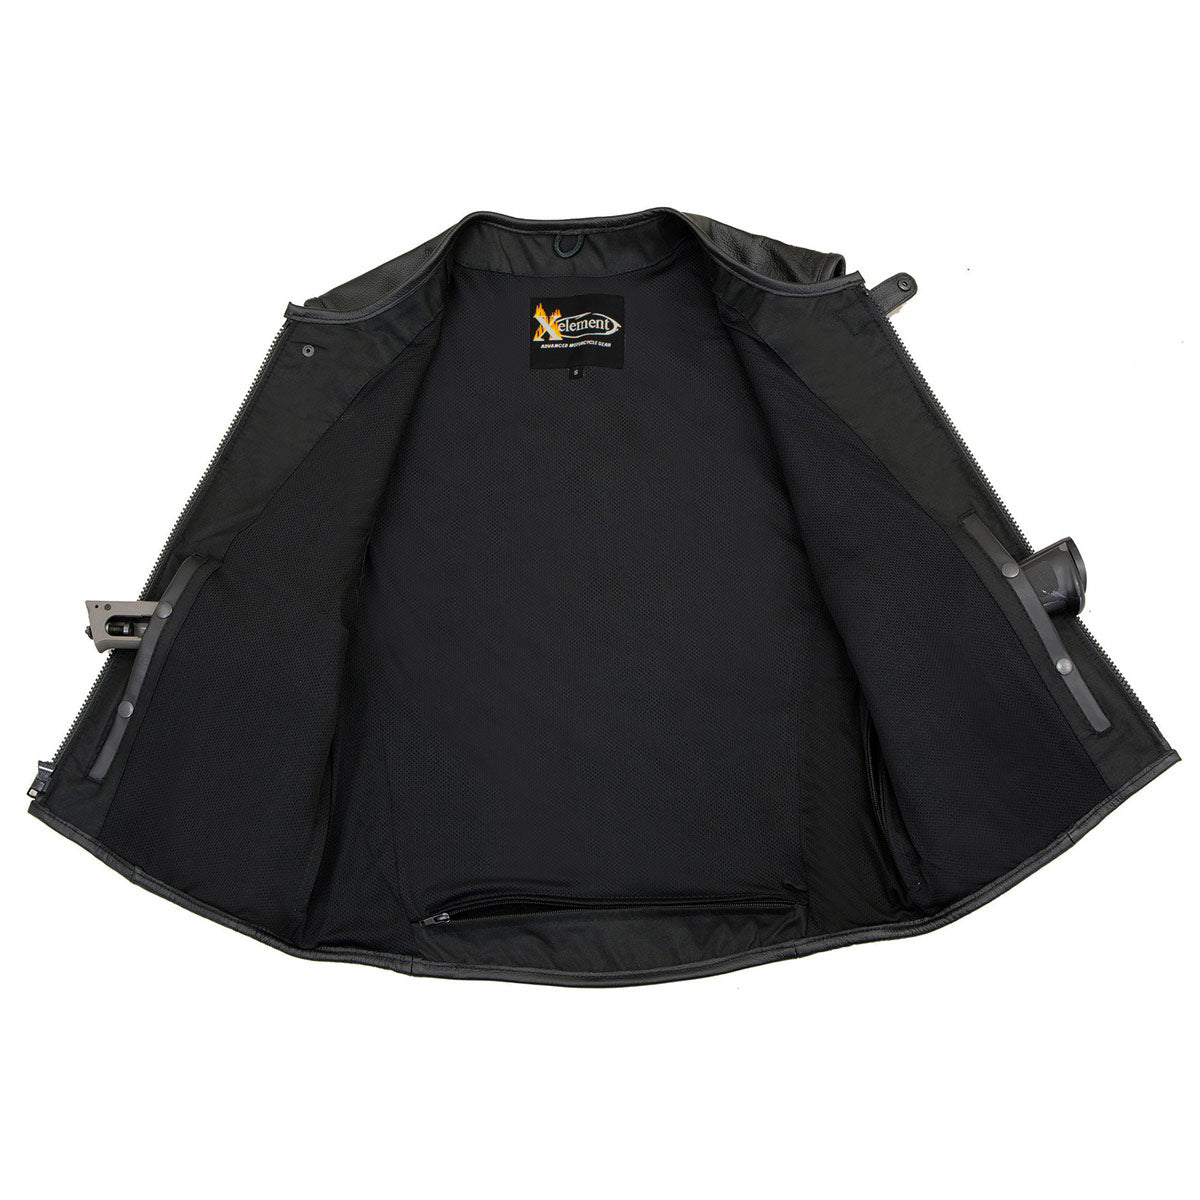 Xelement B95080 Men's ‘Creeper' Black Advanced Triple Strap Design Leather Motorcycle Vest